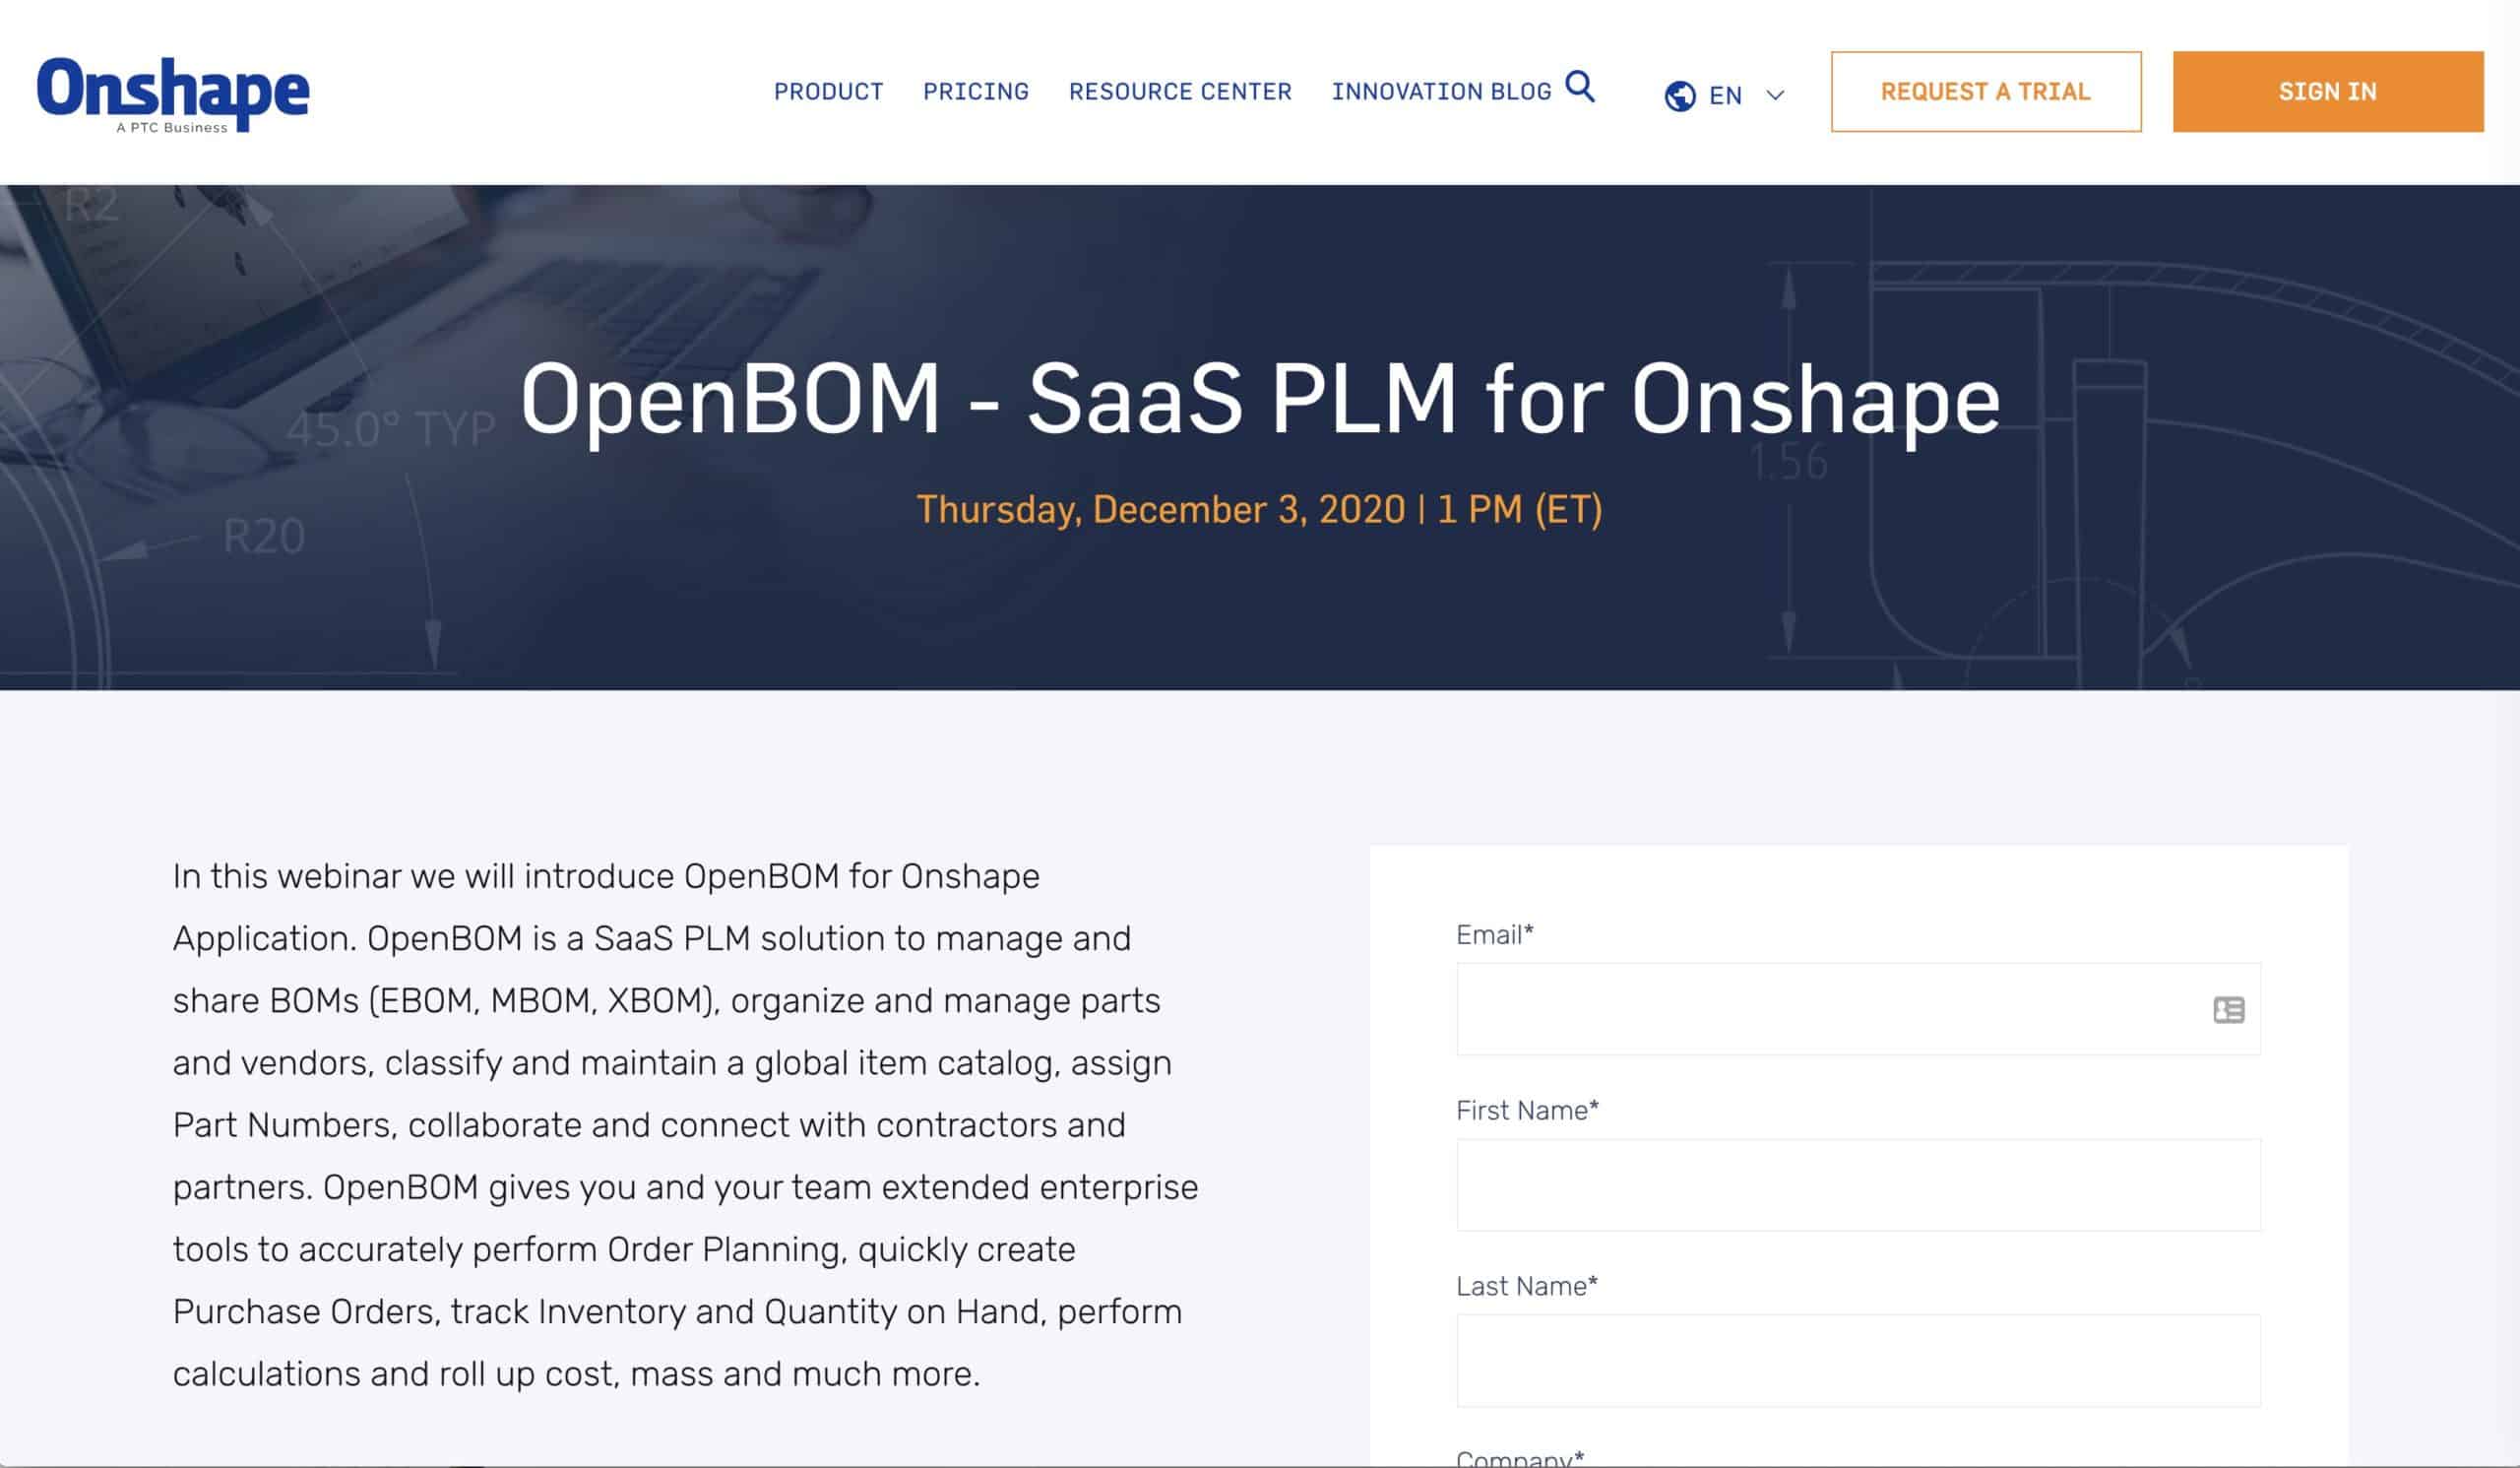 WEBINAR REGISTRATION: OpenBOM SaaS PLM for Onshape